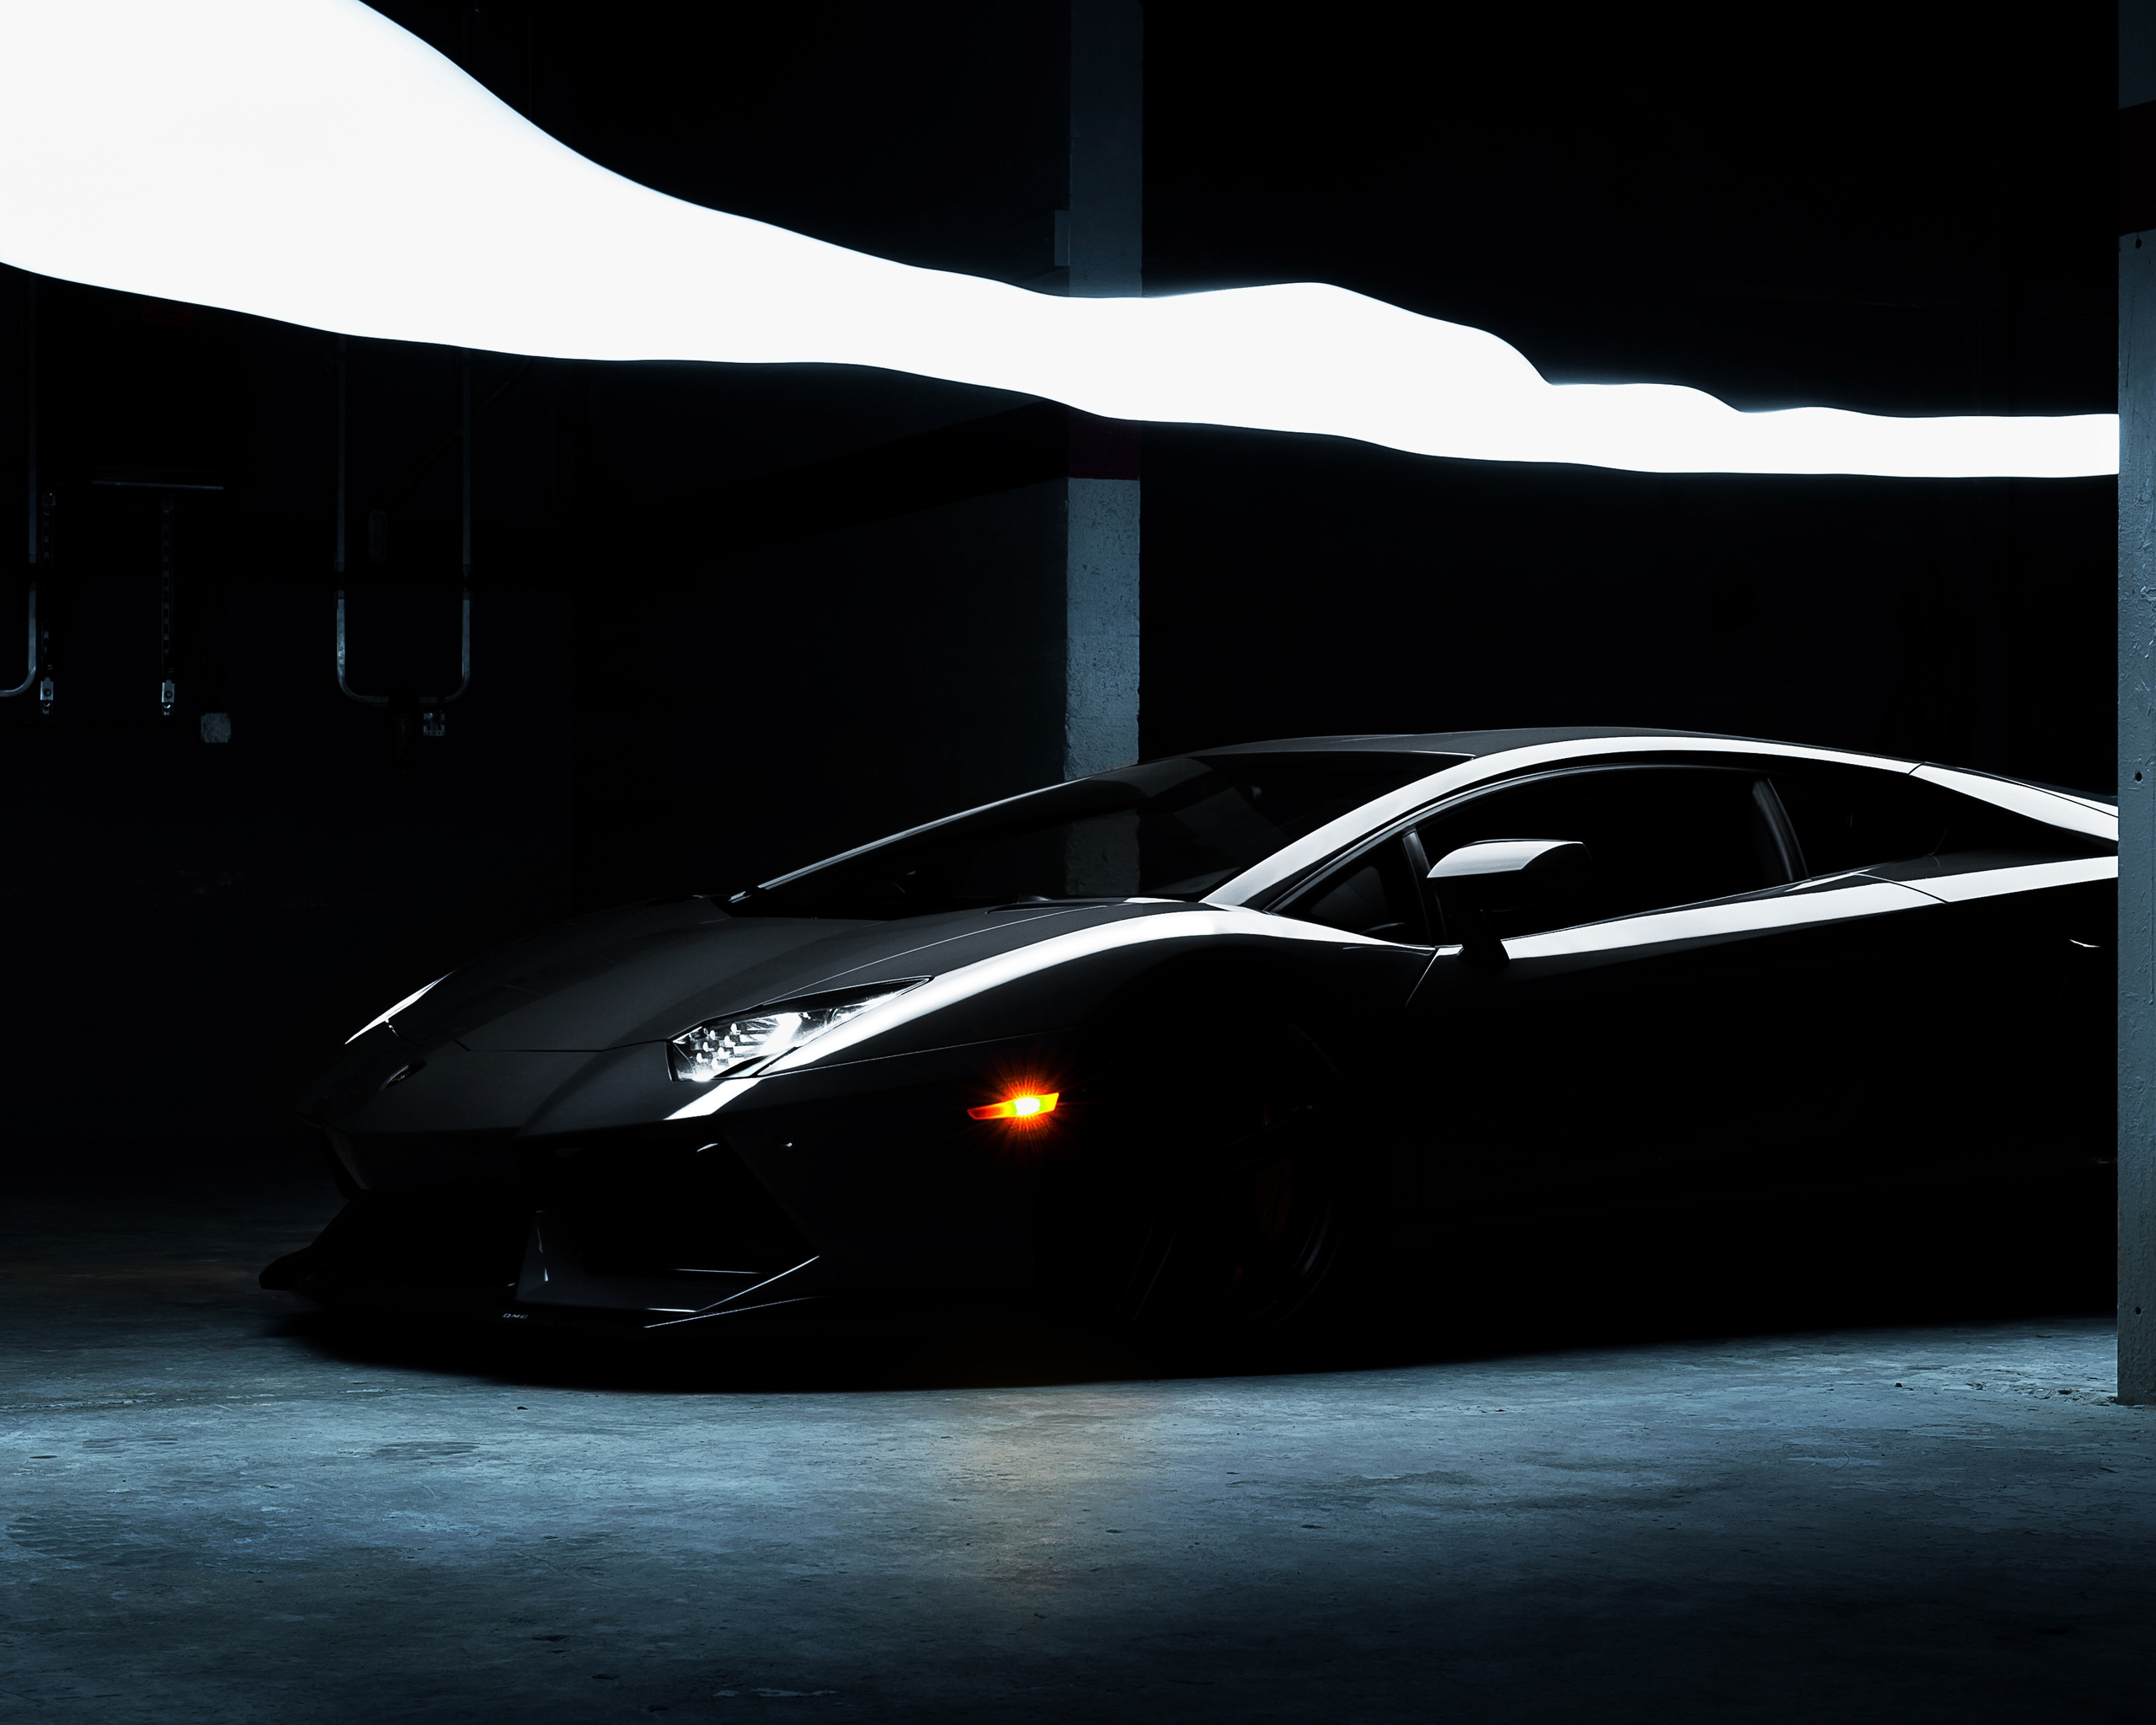 Image: Lamborghini, Aventador, black, headlight, columns